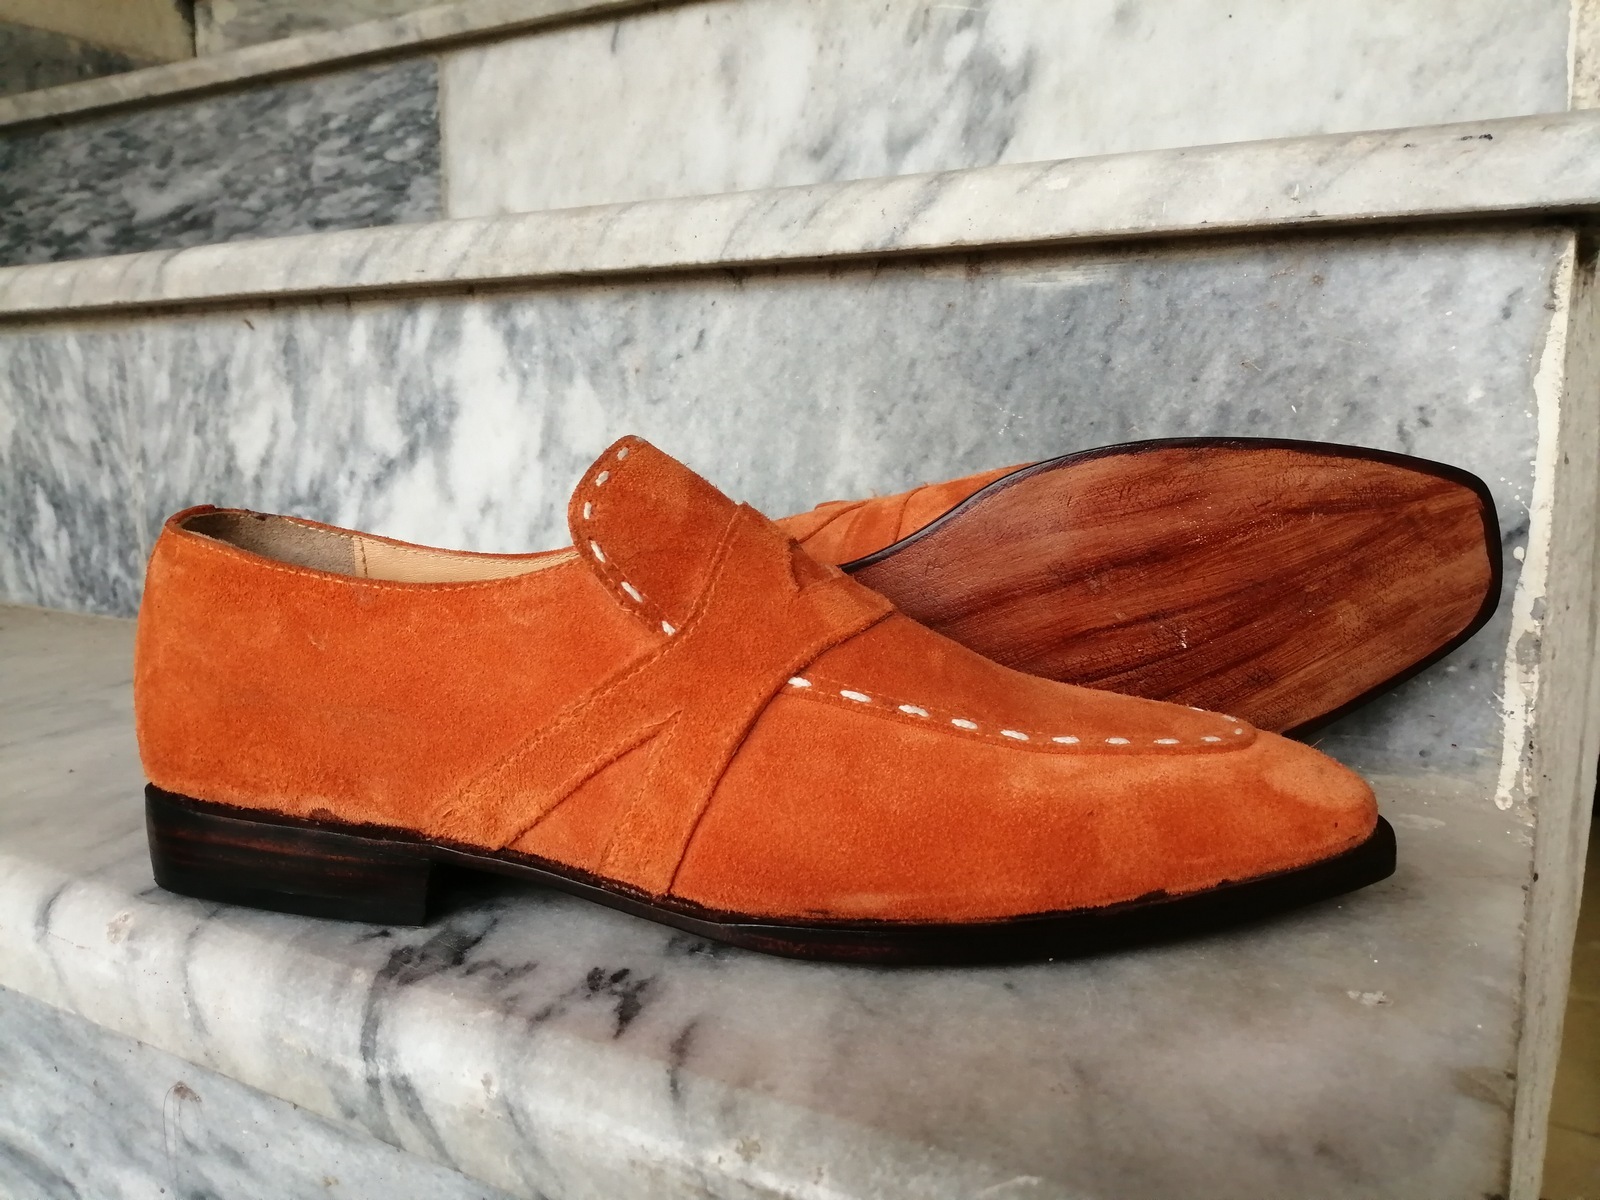 New Handmade Men's Loafer Shoes, Men's Tan Brown Suede Slip Ons Formal Shoes